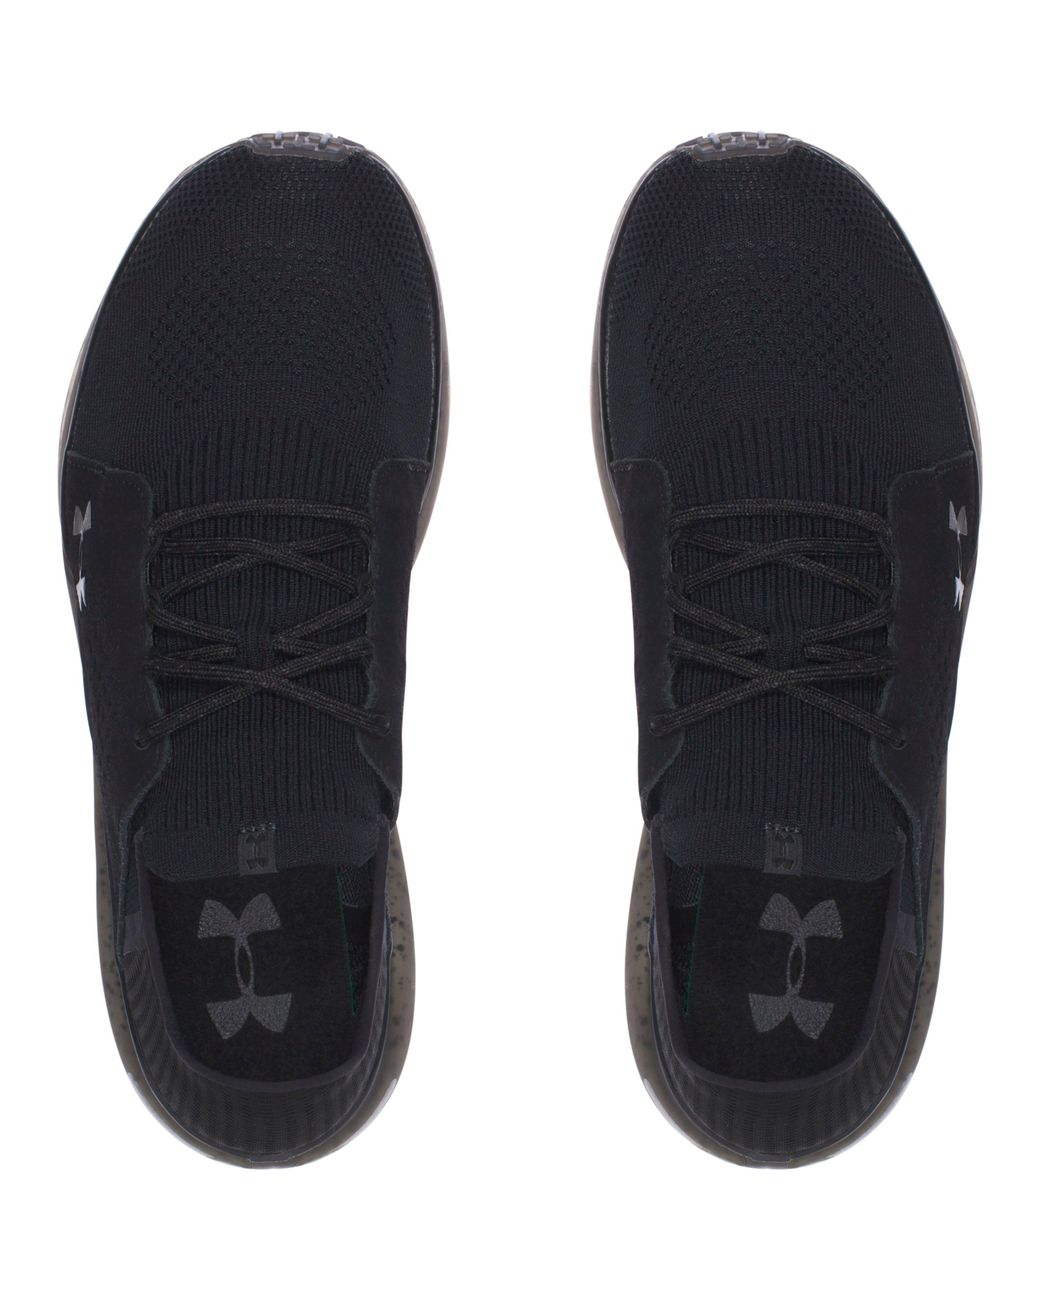 Under Armour Men's UA Threadborne Reveal Running Shoes Training Sneakers 